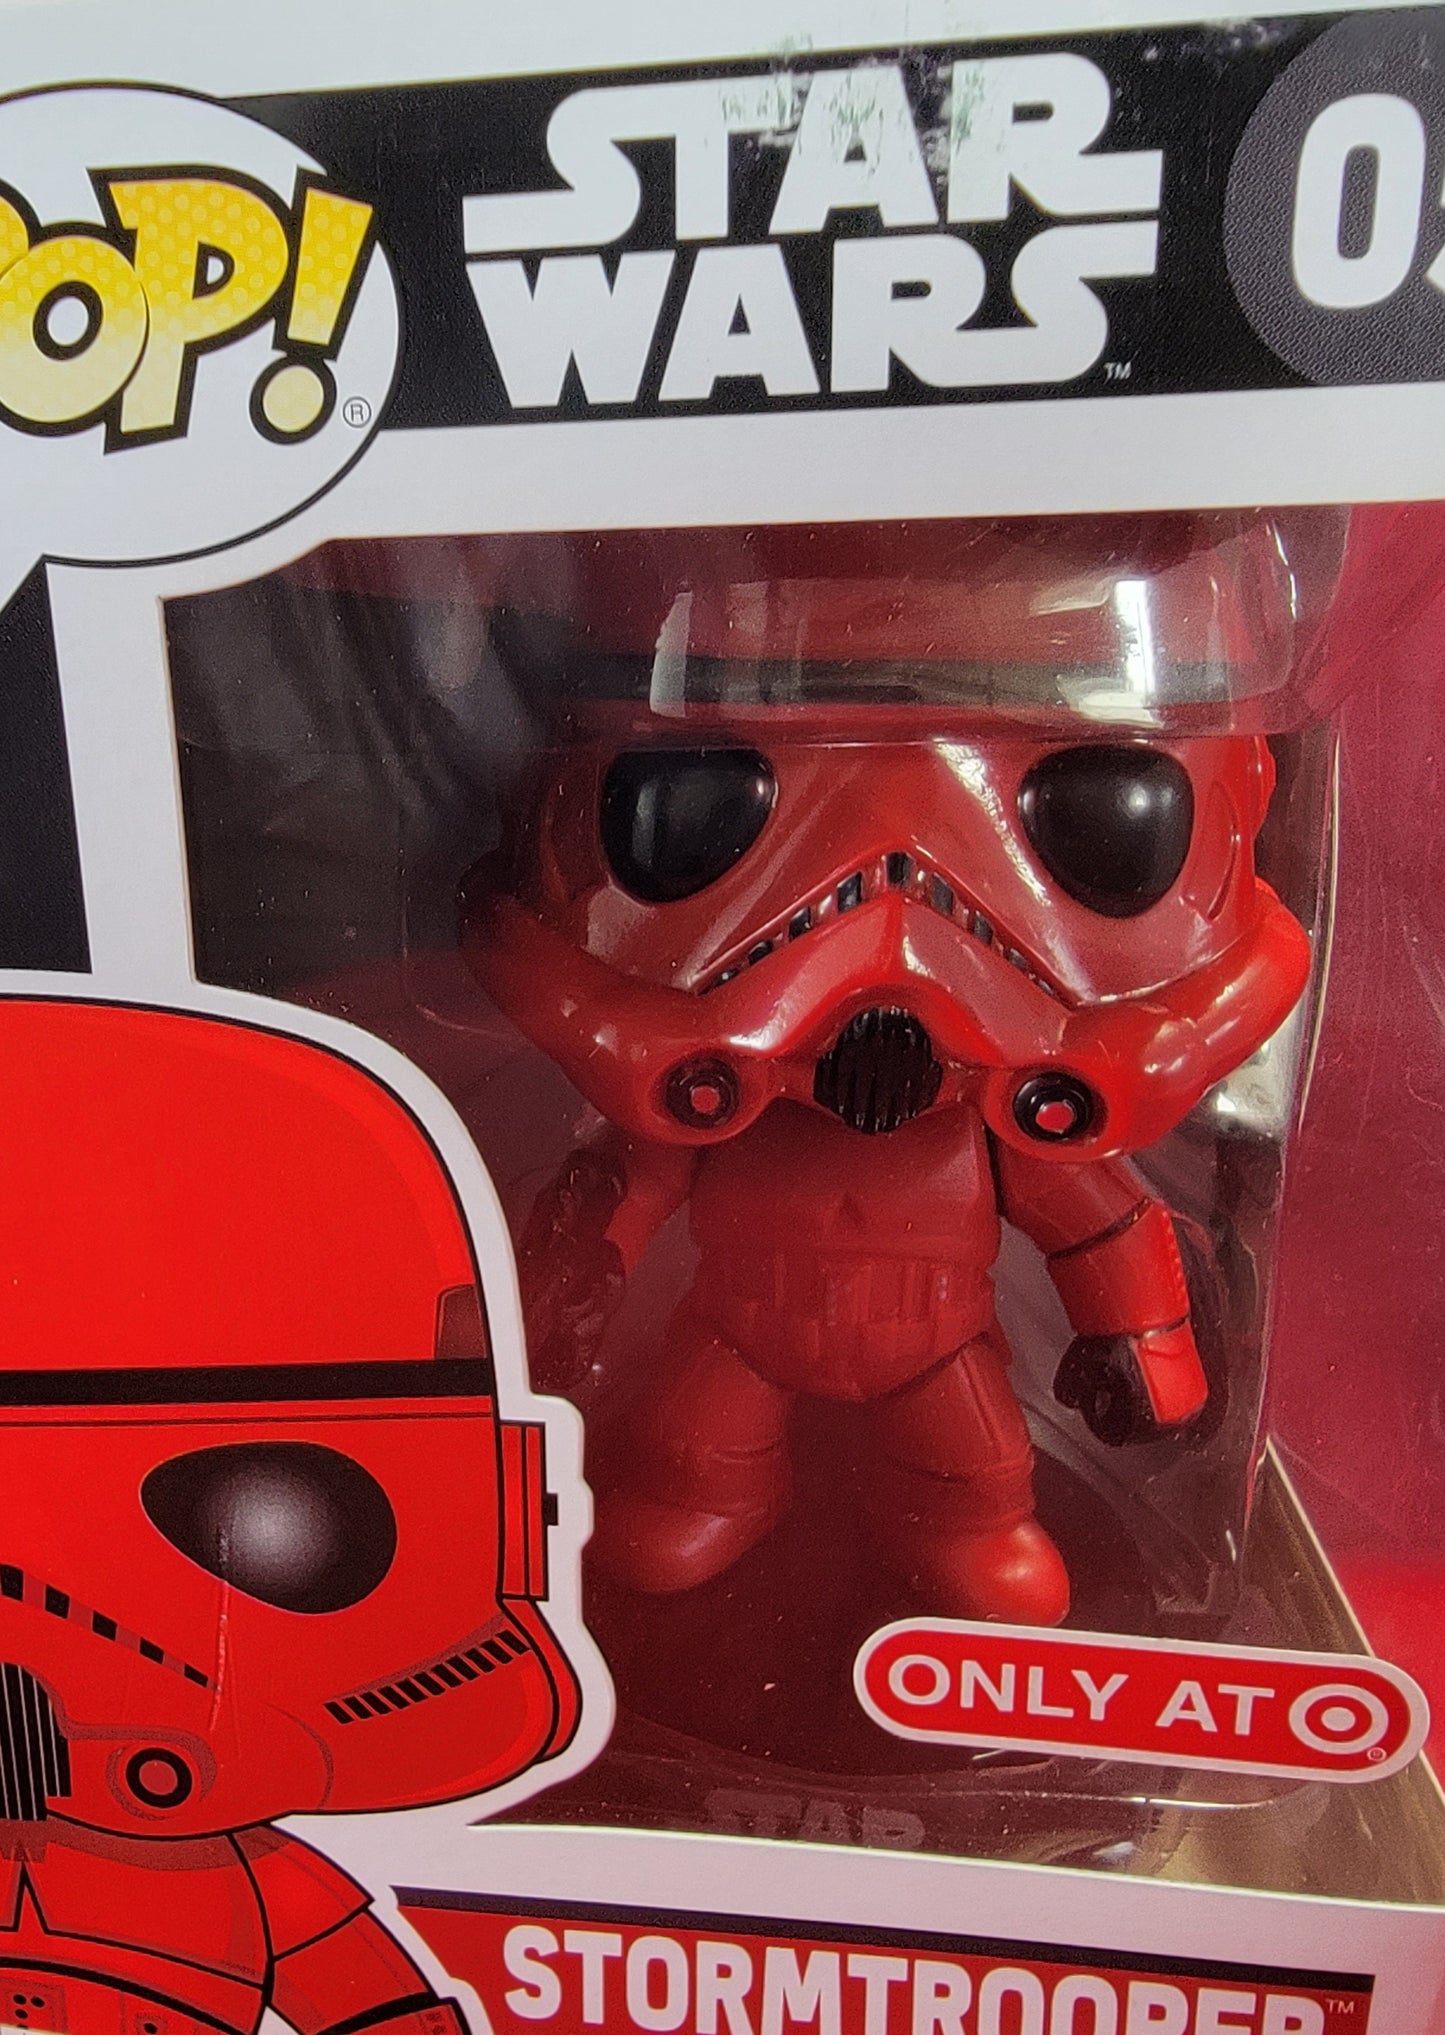 Stormtrooper target exclusive Funko # 05 Star Wars Pop (nib)